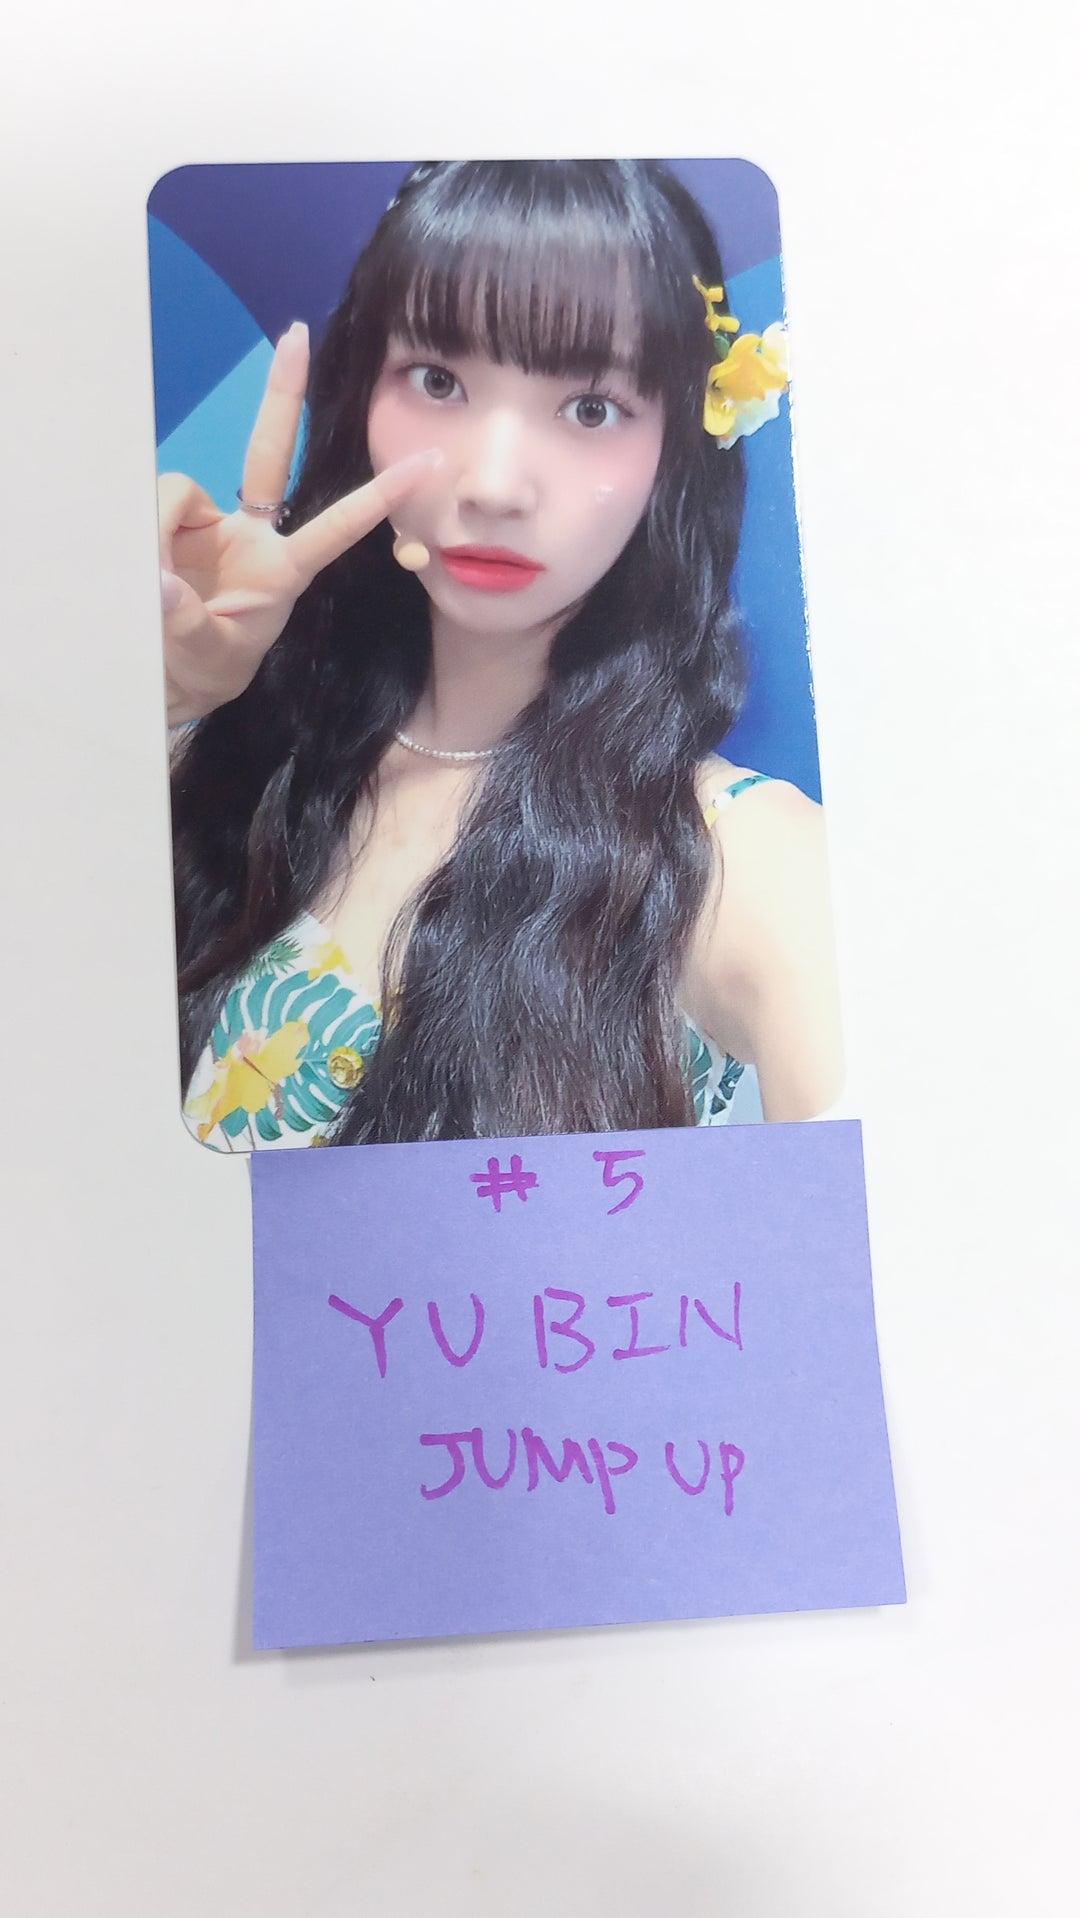 Oh My Girl 「金色の砂時計」 - Jump Up ファンサインイベント フォトカード 第 7 ラウンド [23.09.14]